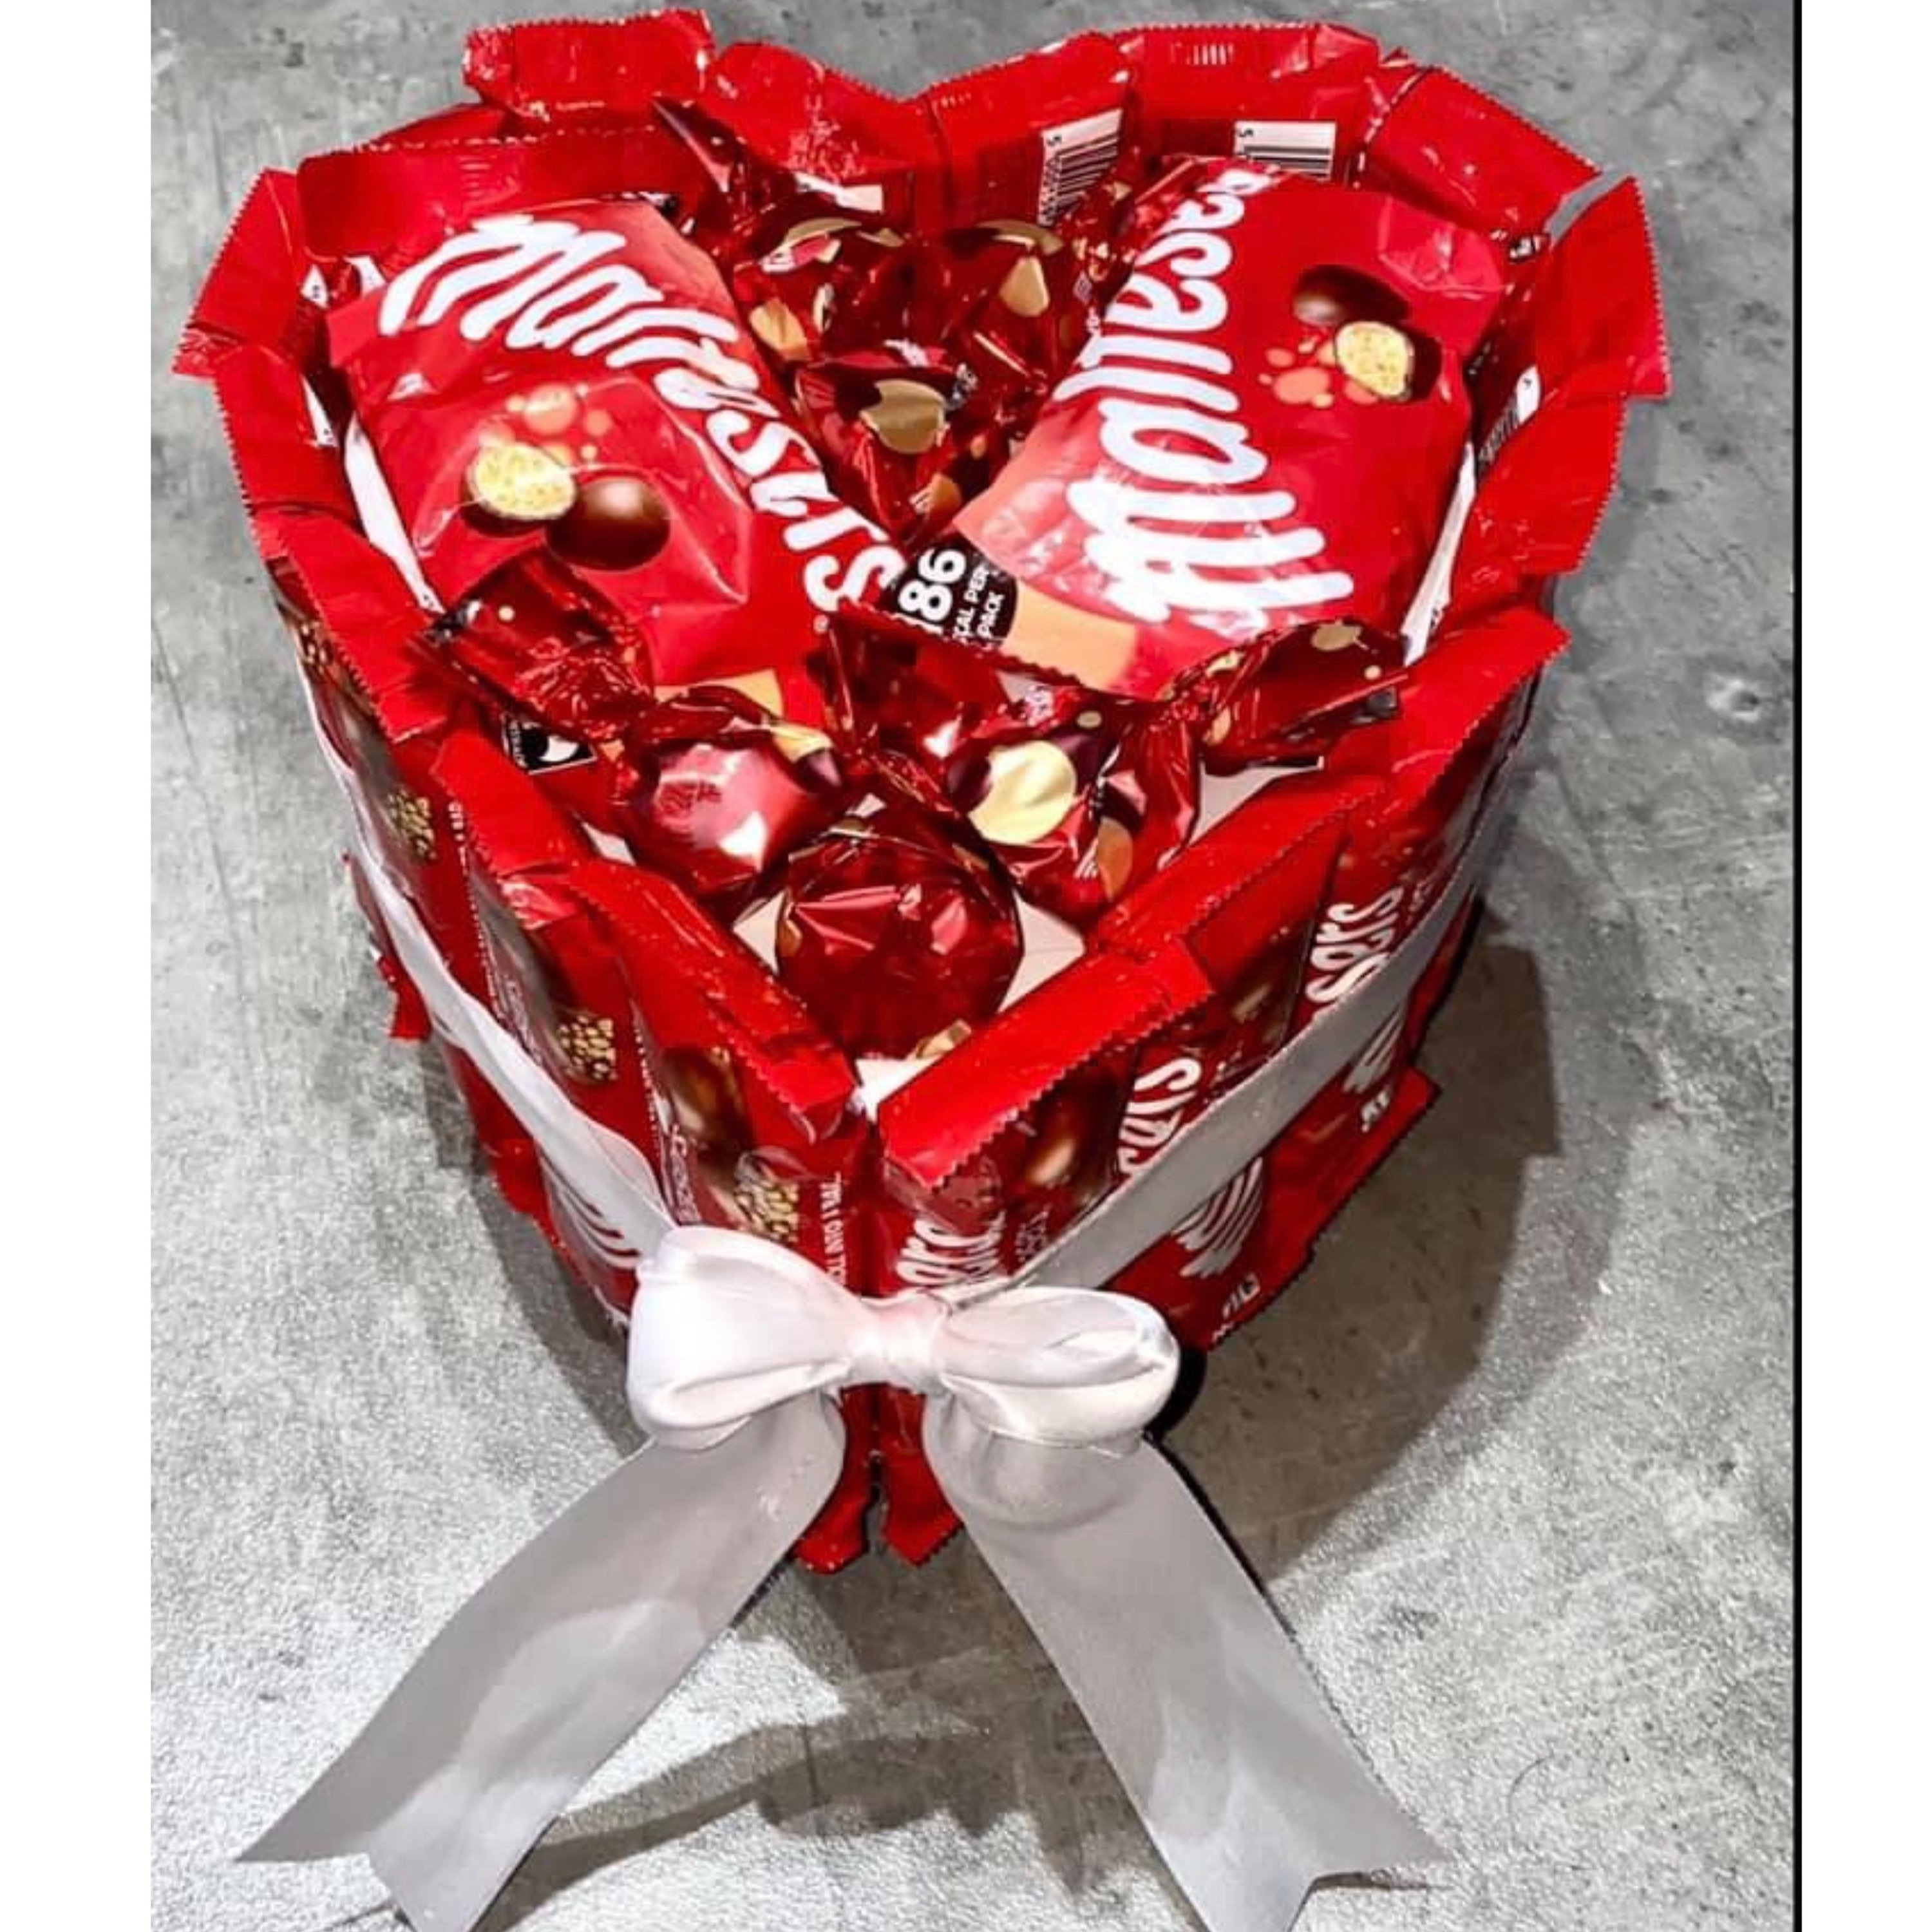 Dairy Milk Heart Bouquet - Chocolate Bouquet - Heart Bouquet - Chocolate  Day Gift For Love - VivaGifts